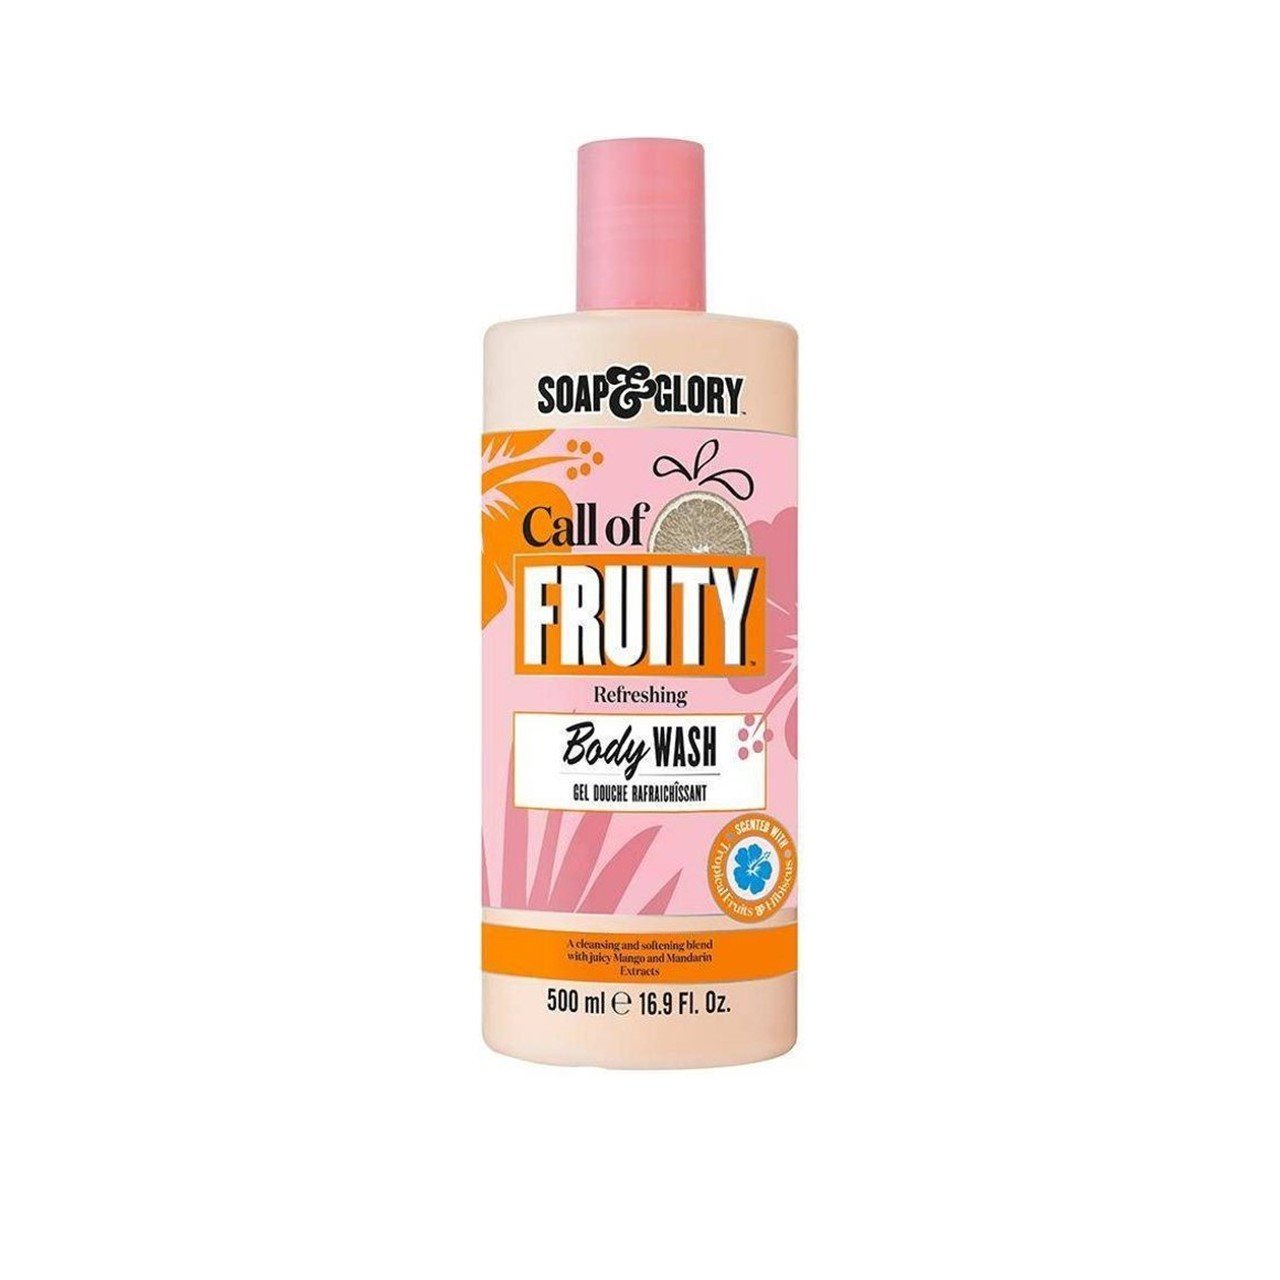 Soap & Glory Call of Fruity Refreshing Body Wash 500ml (16.9 fl oz)